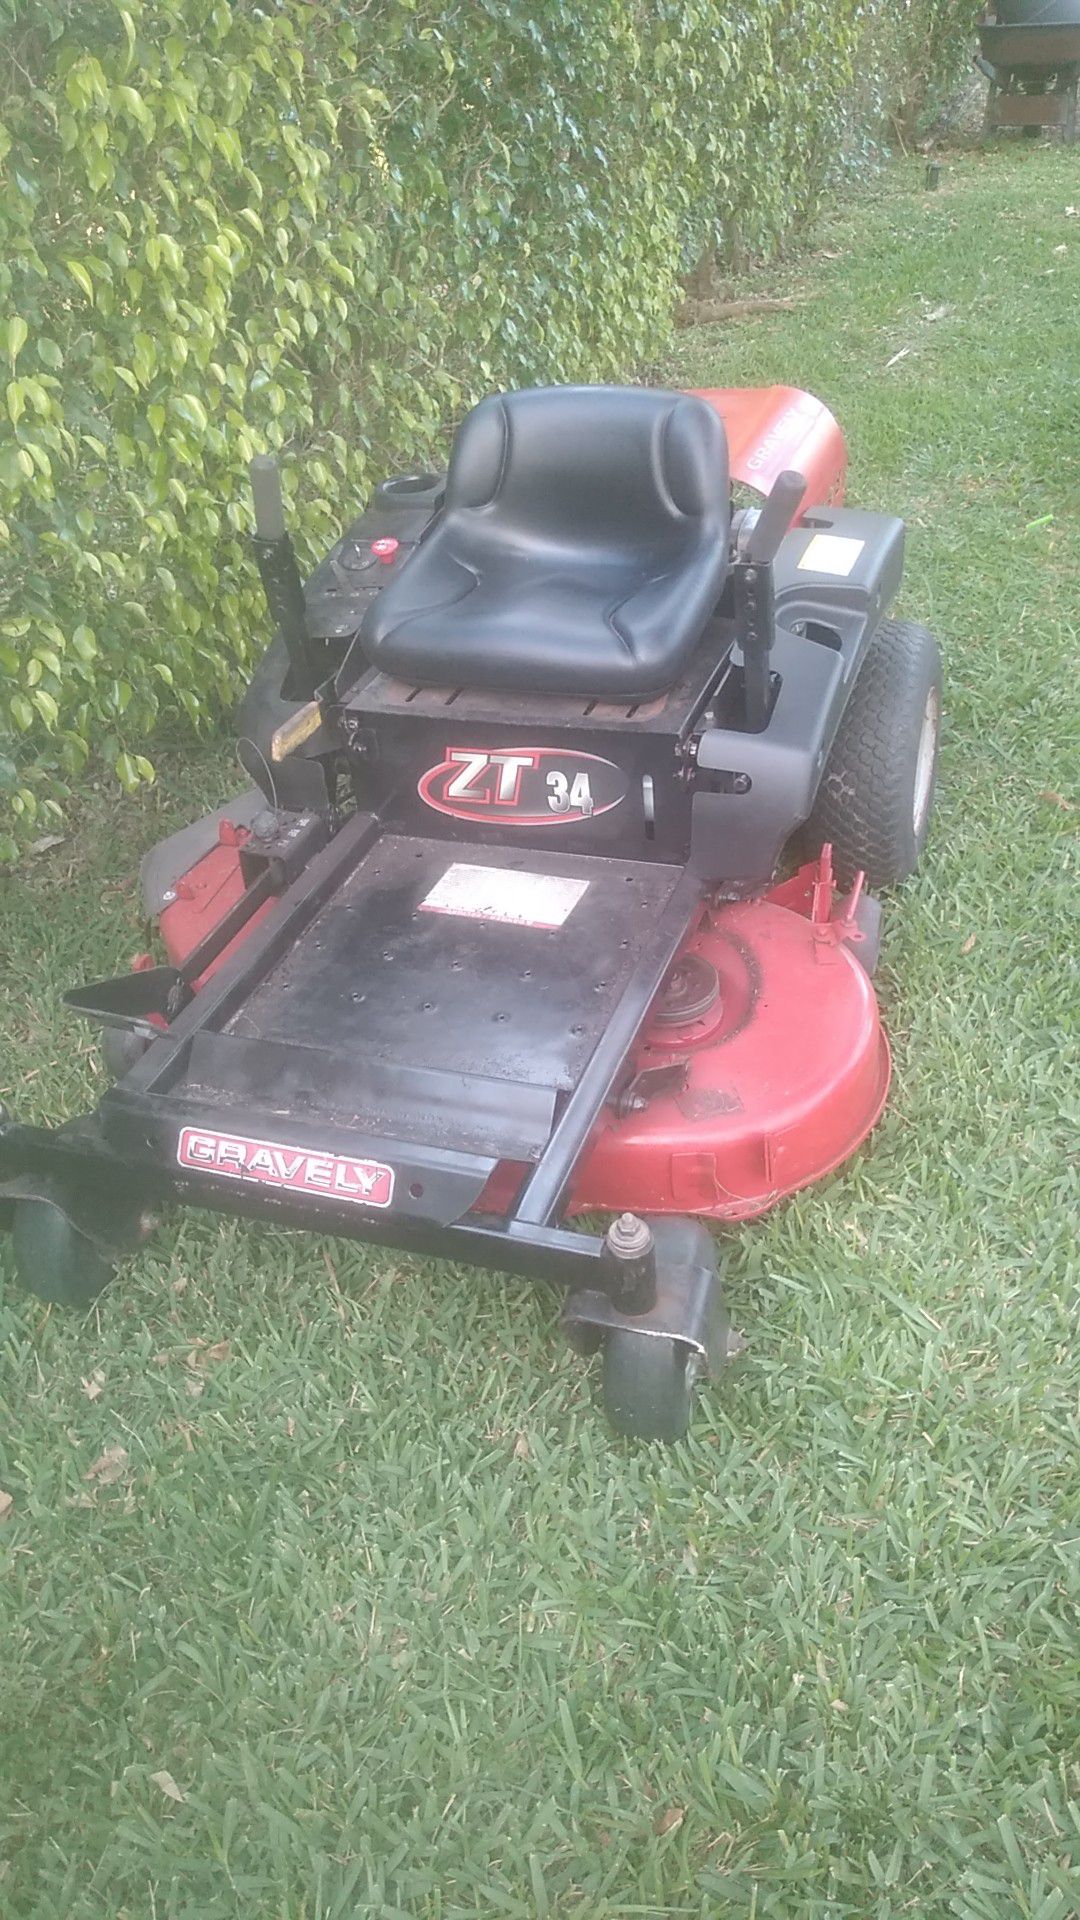 Gravely zero turn lawn mower